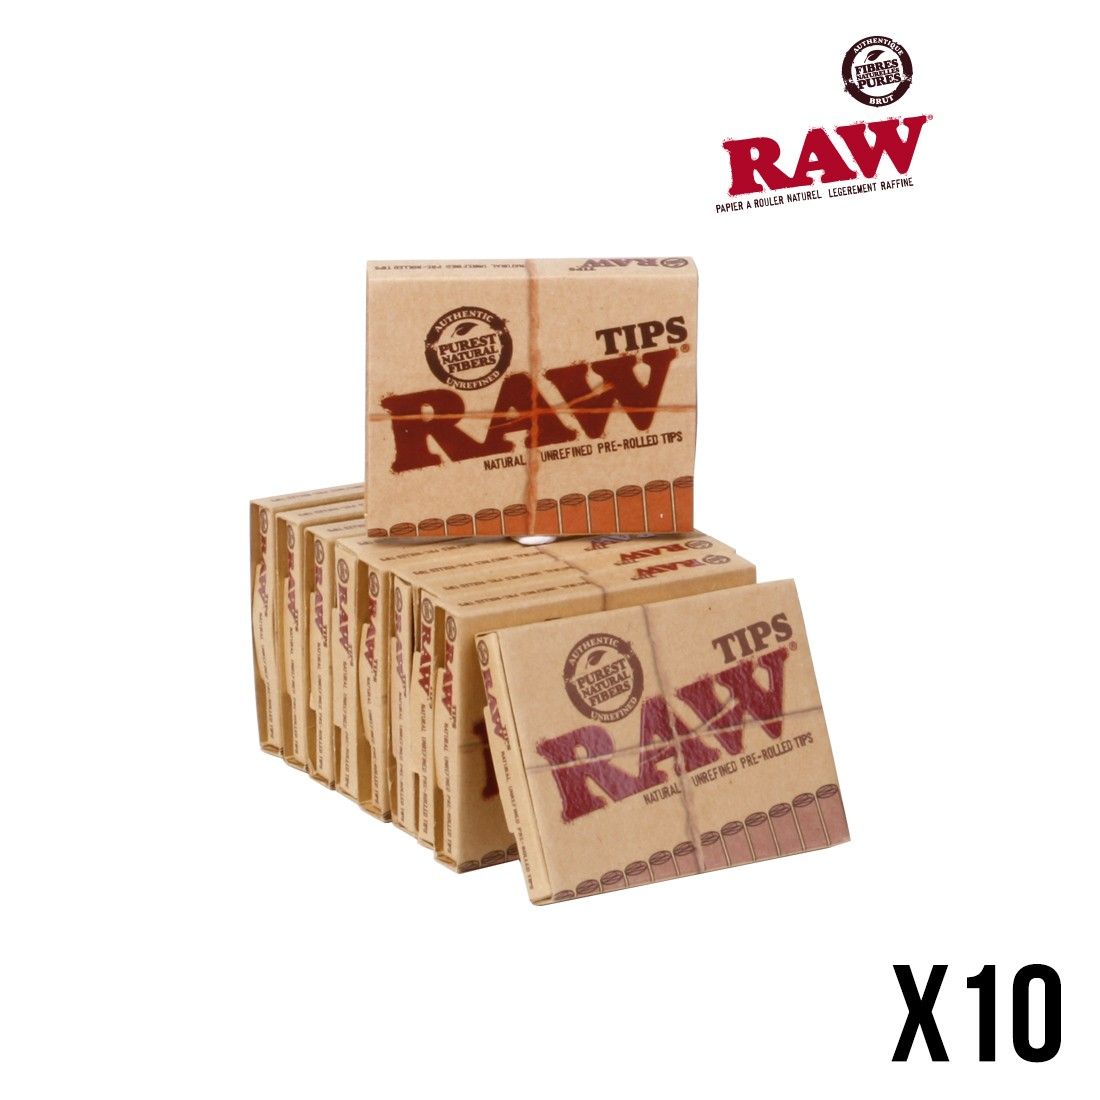 Acheter toncar raw, filtre sans chlore, Filtre en carton - toncar